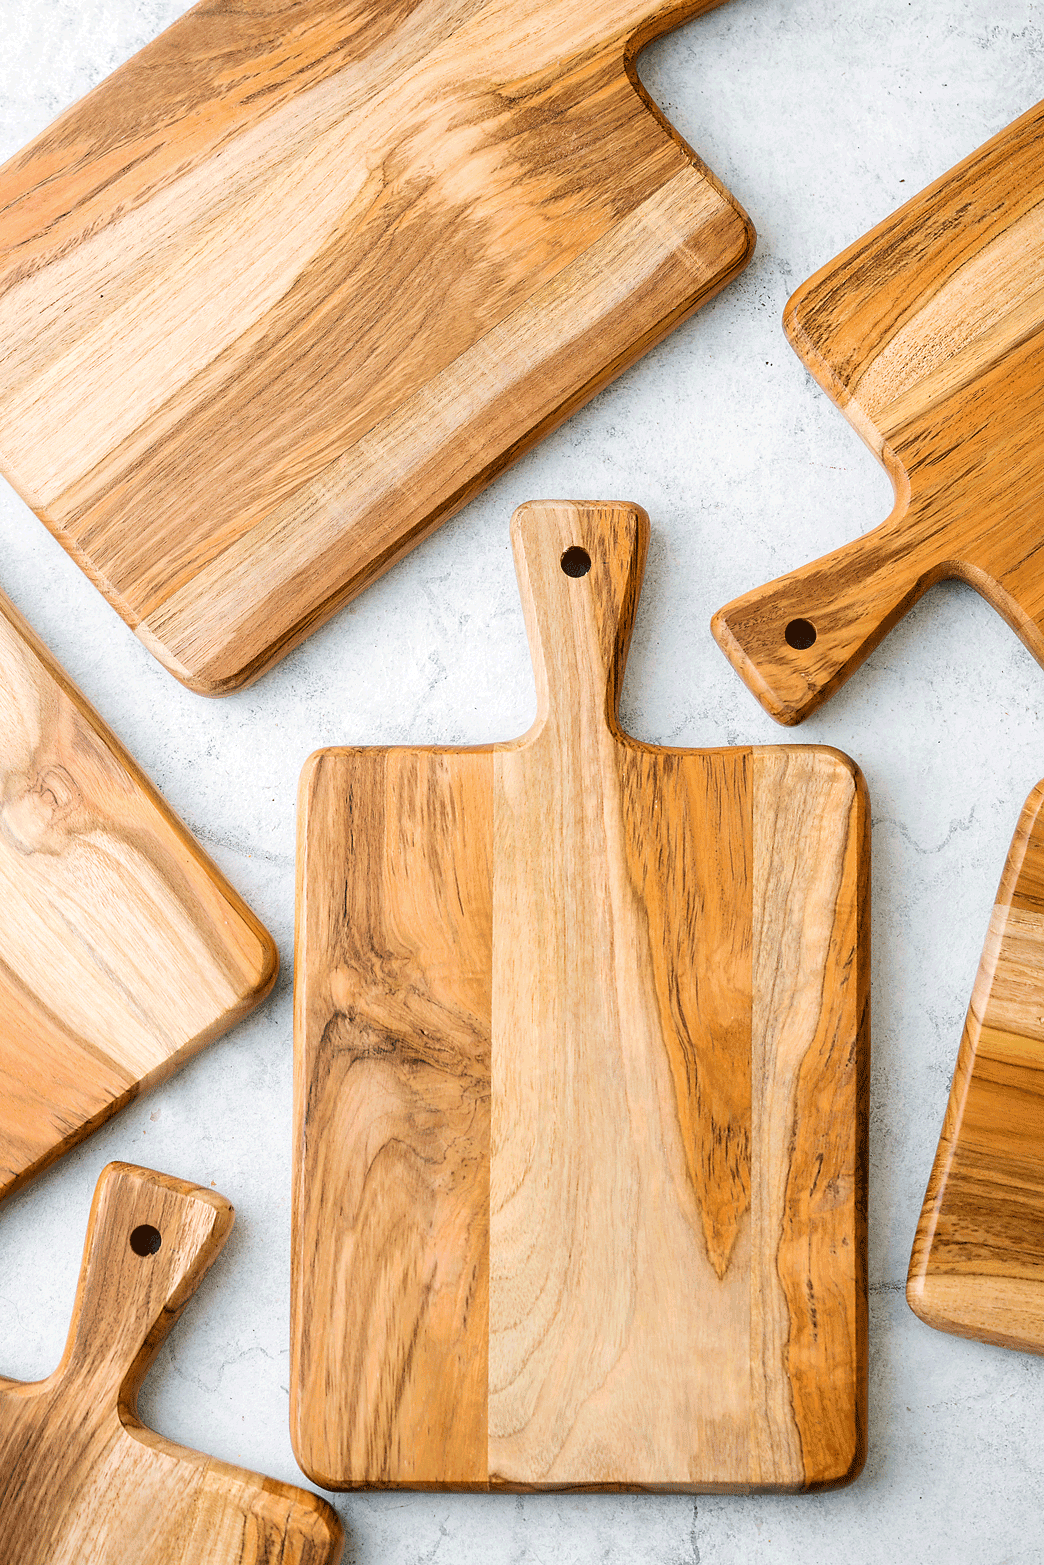 Samgun - Classic wooden chopping board, a product by Araana Homes